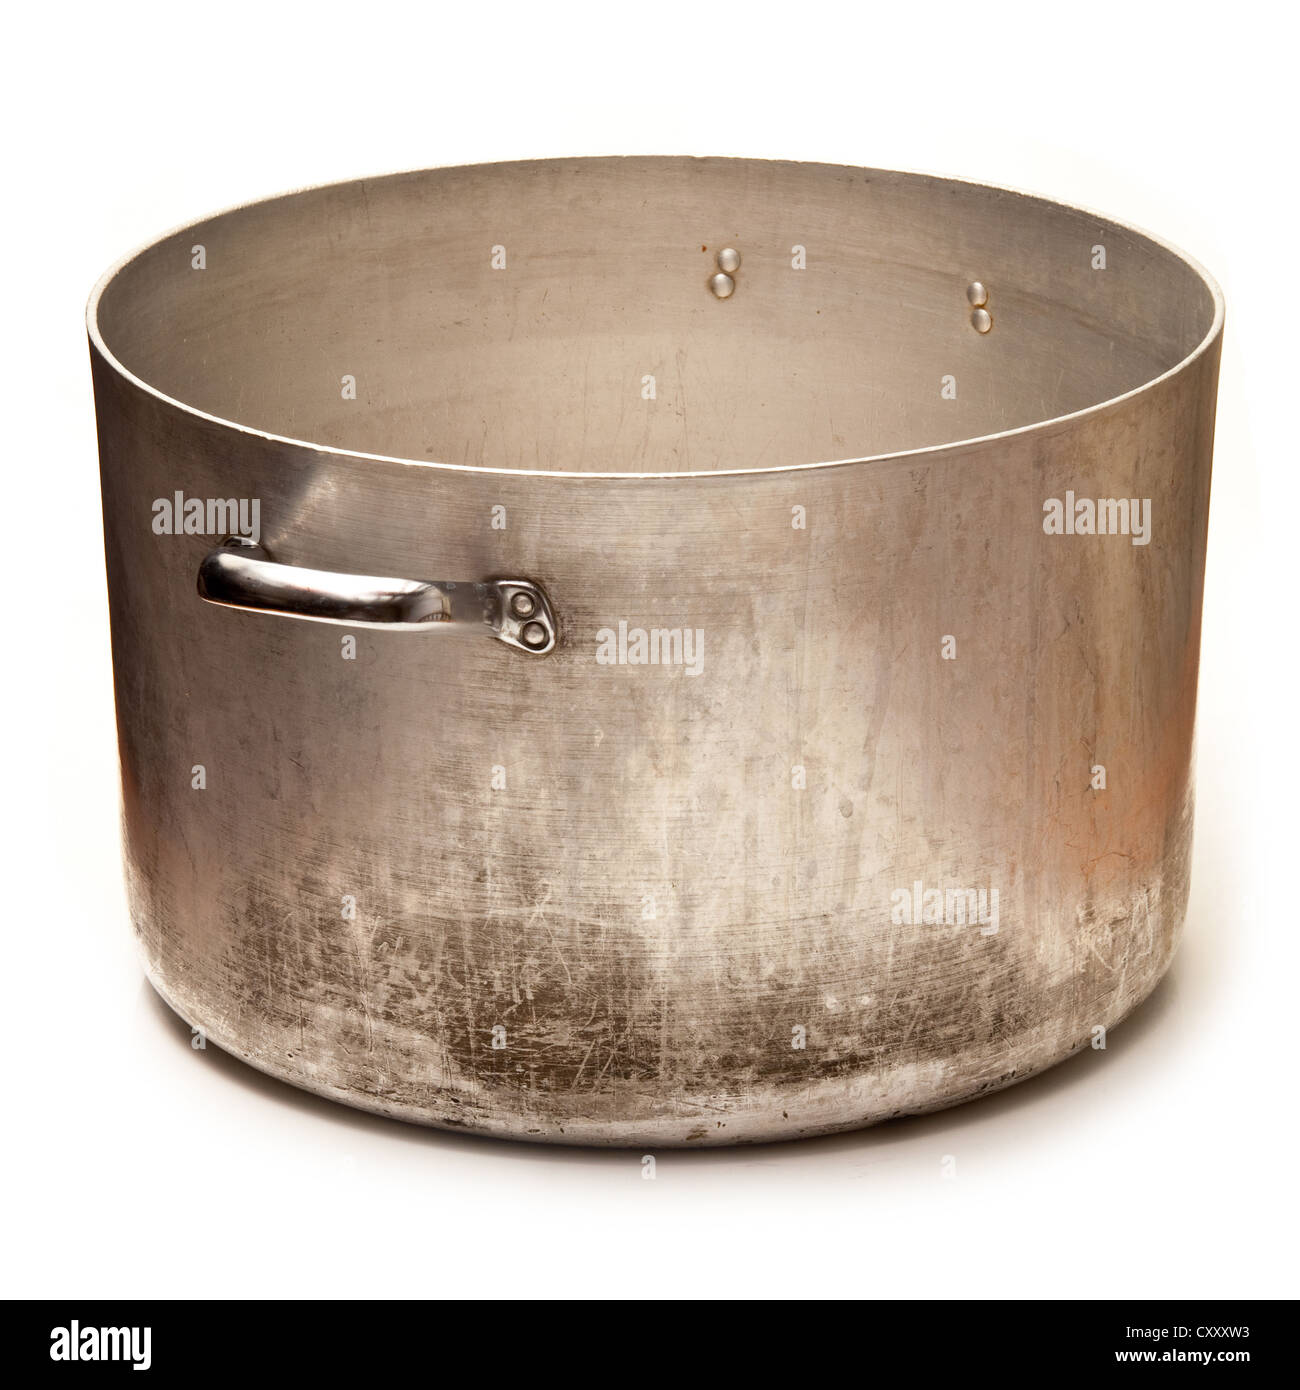 https://c8.alamy.com/comp/CXXXW3/large-metal-saucepan-cooking-pot-isolated-on-a-white-studio-background-CXXXW3.jpg